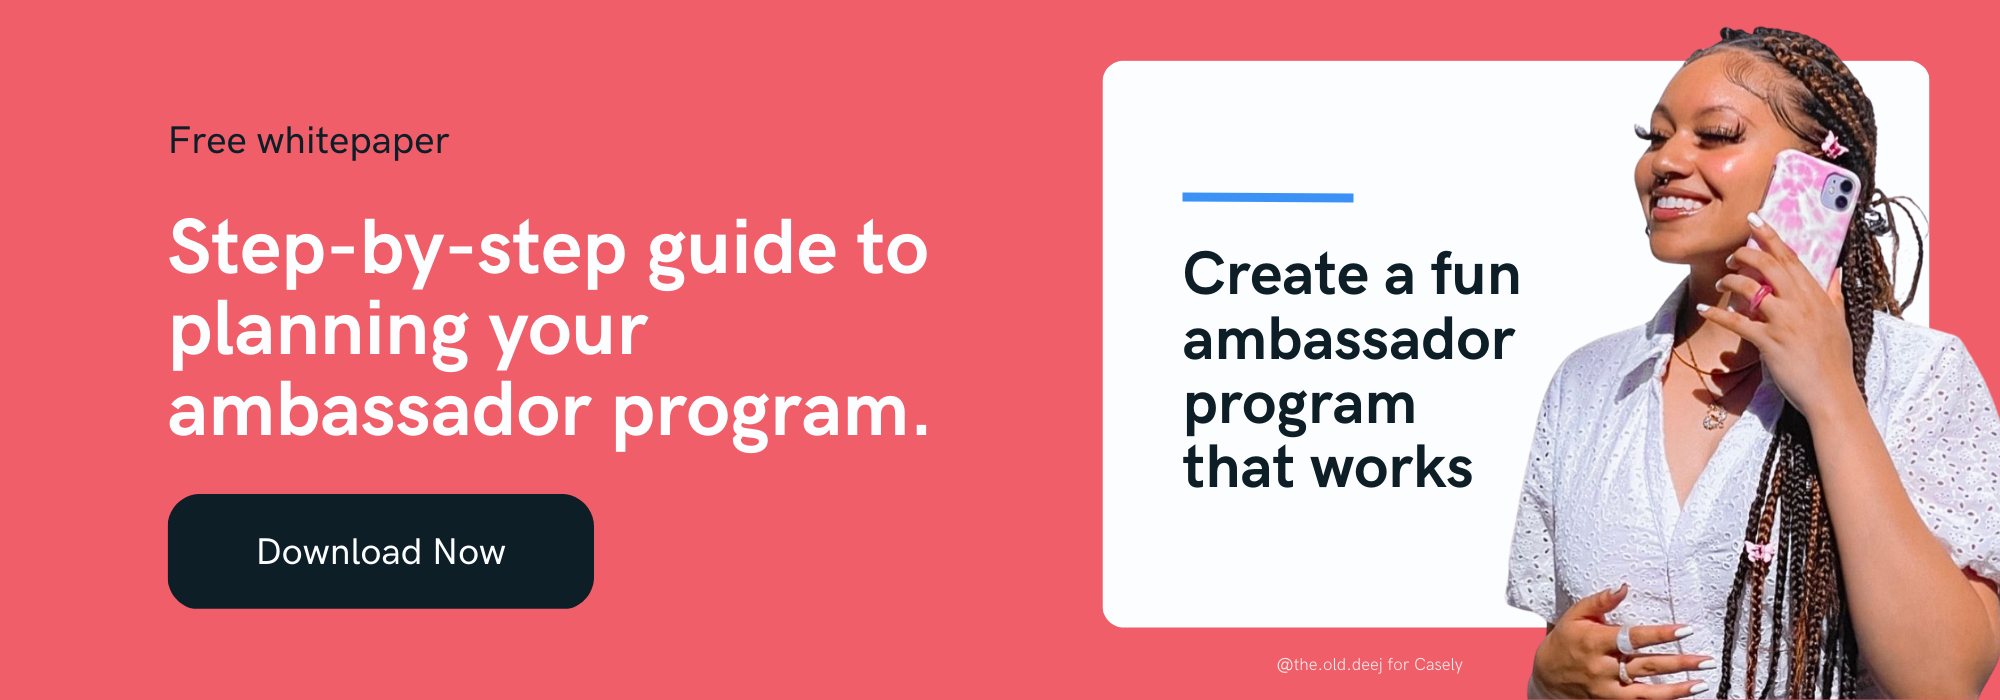 4 Ways to Create a Fun Ambassador Program That Works